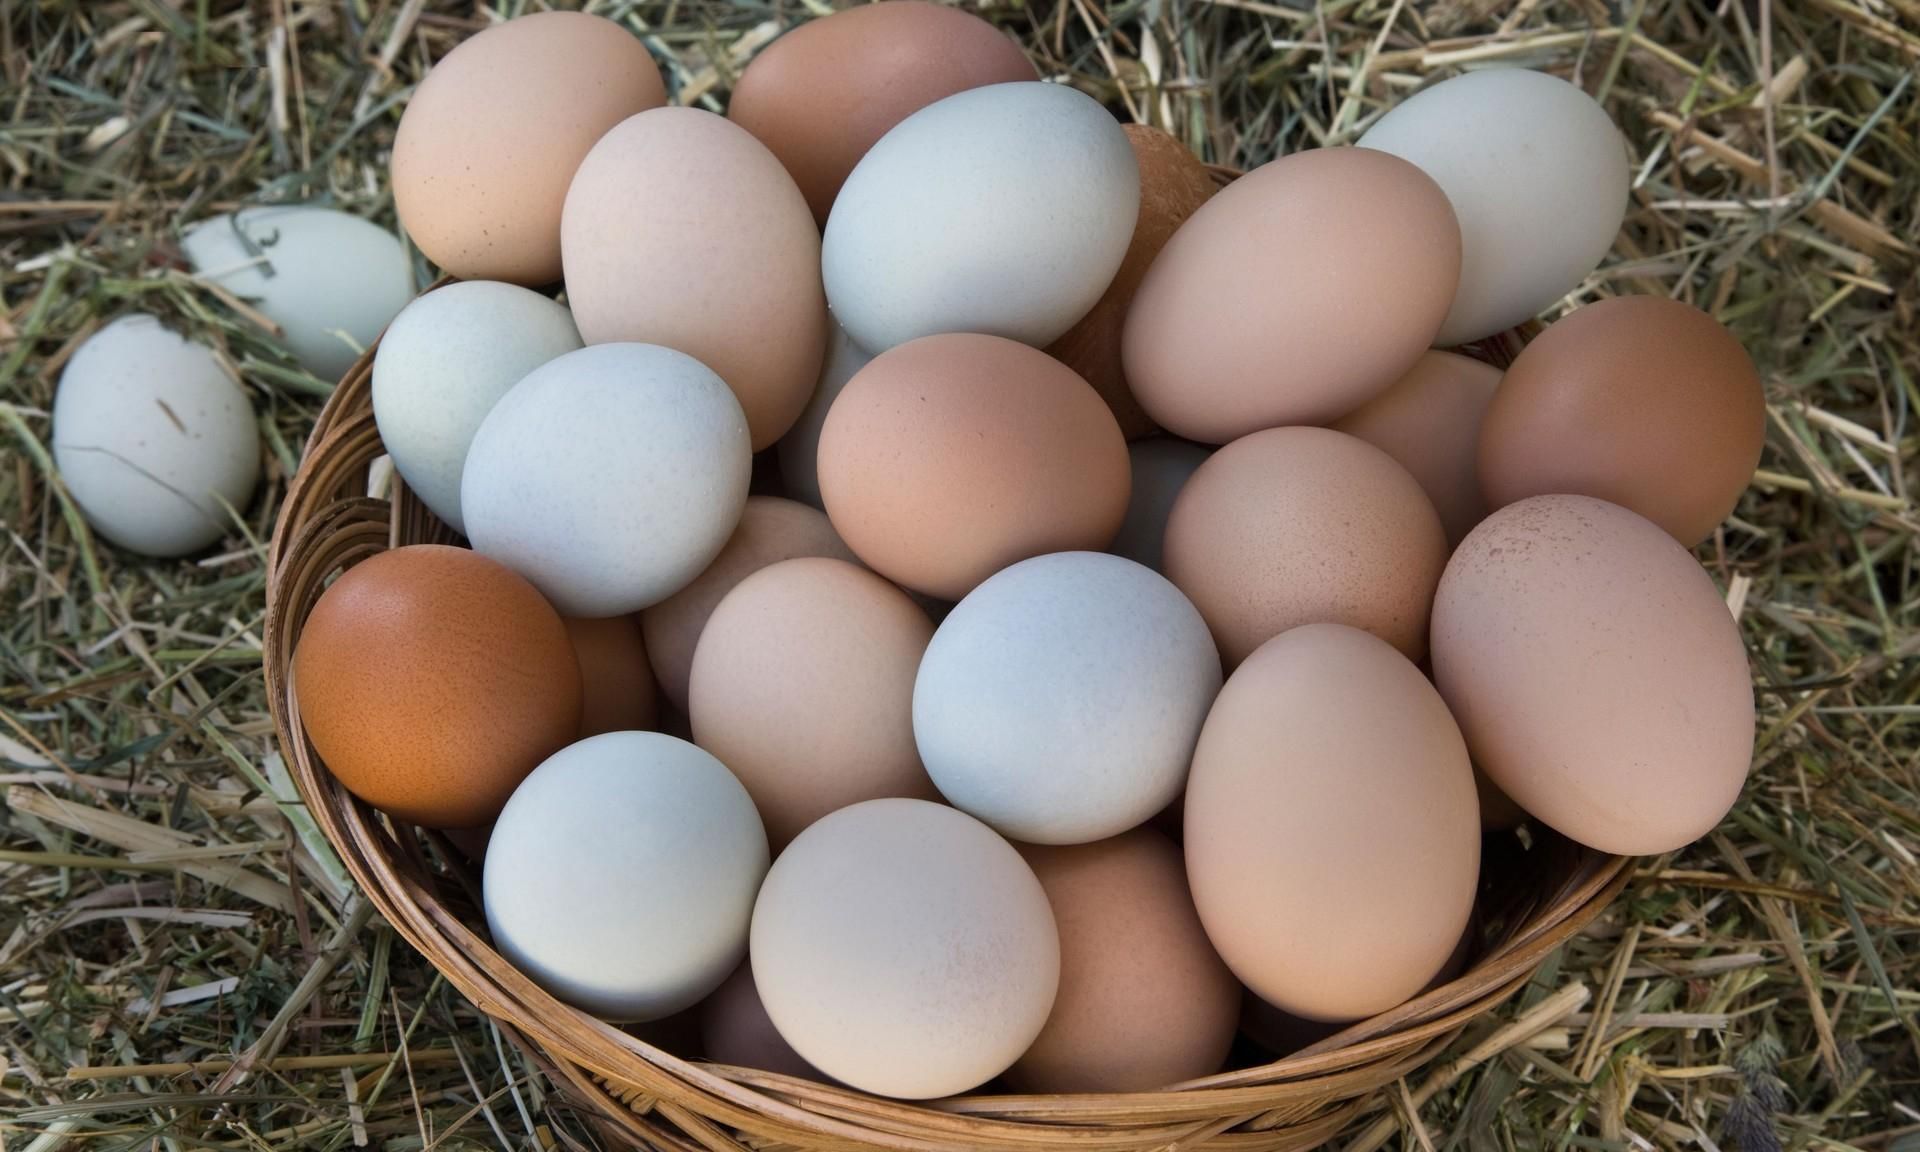 50 гривен за десяток: цена яиц вскоре подскочит - Агро